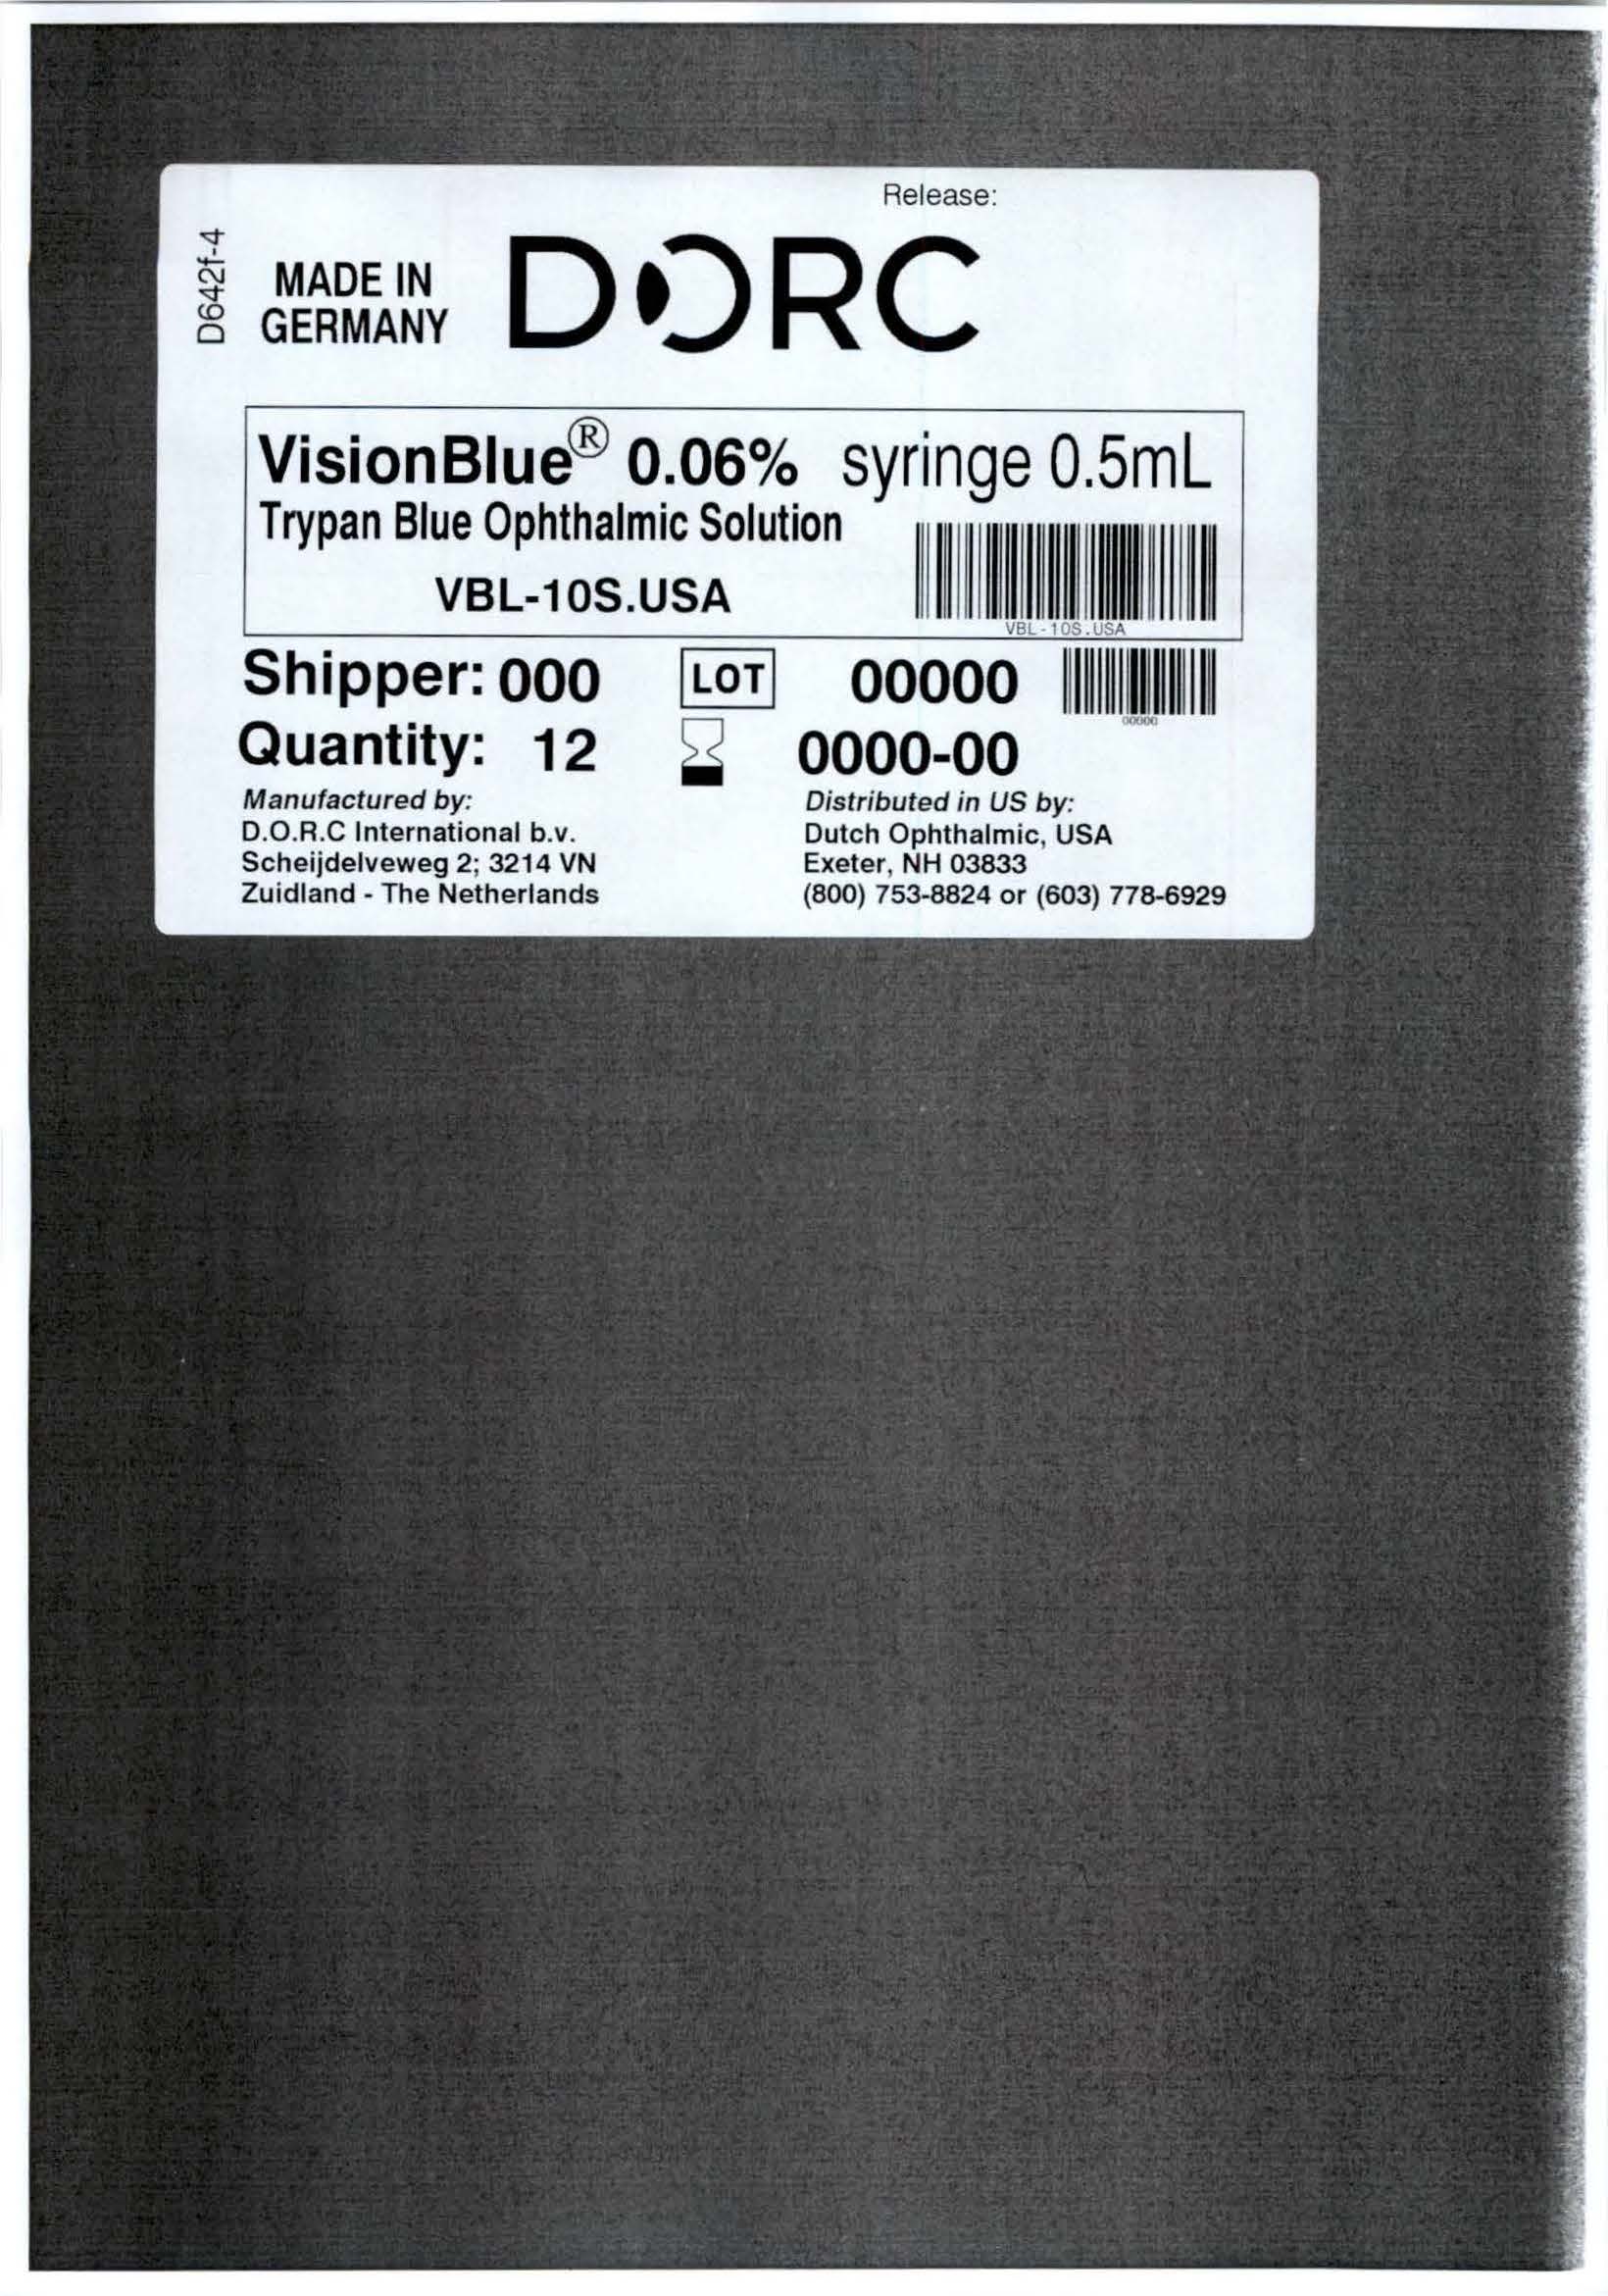 VisionBlue 0.06% - shipping box label